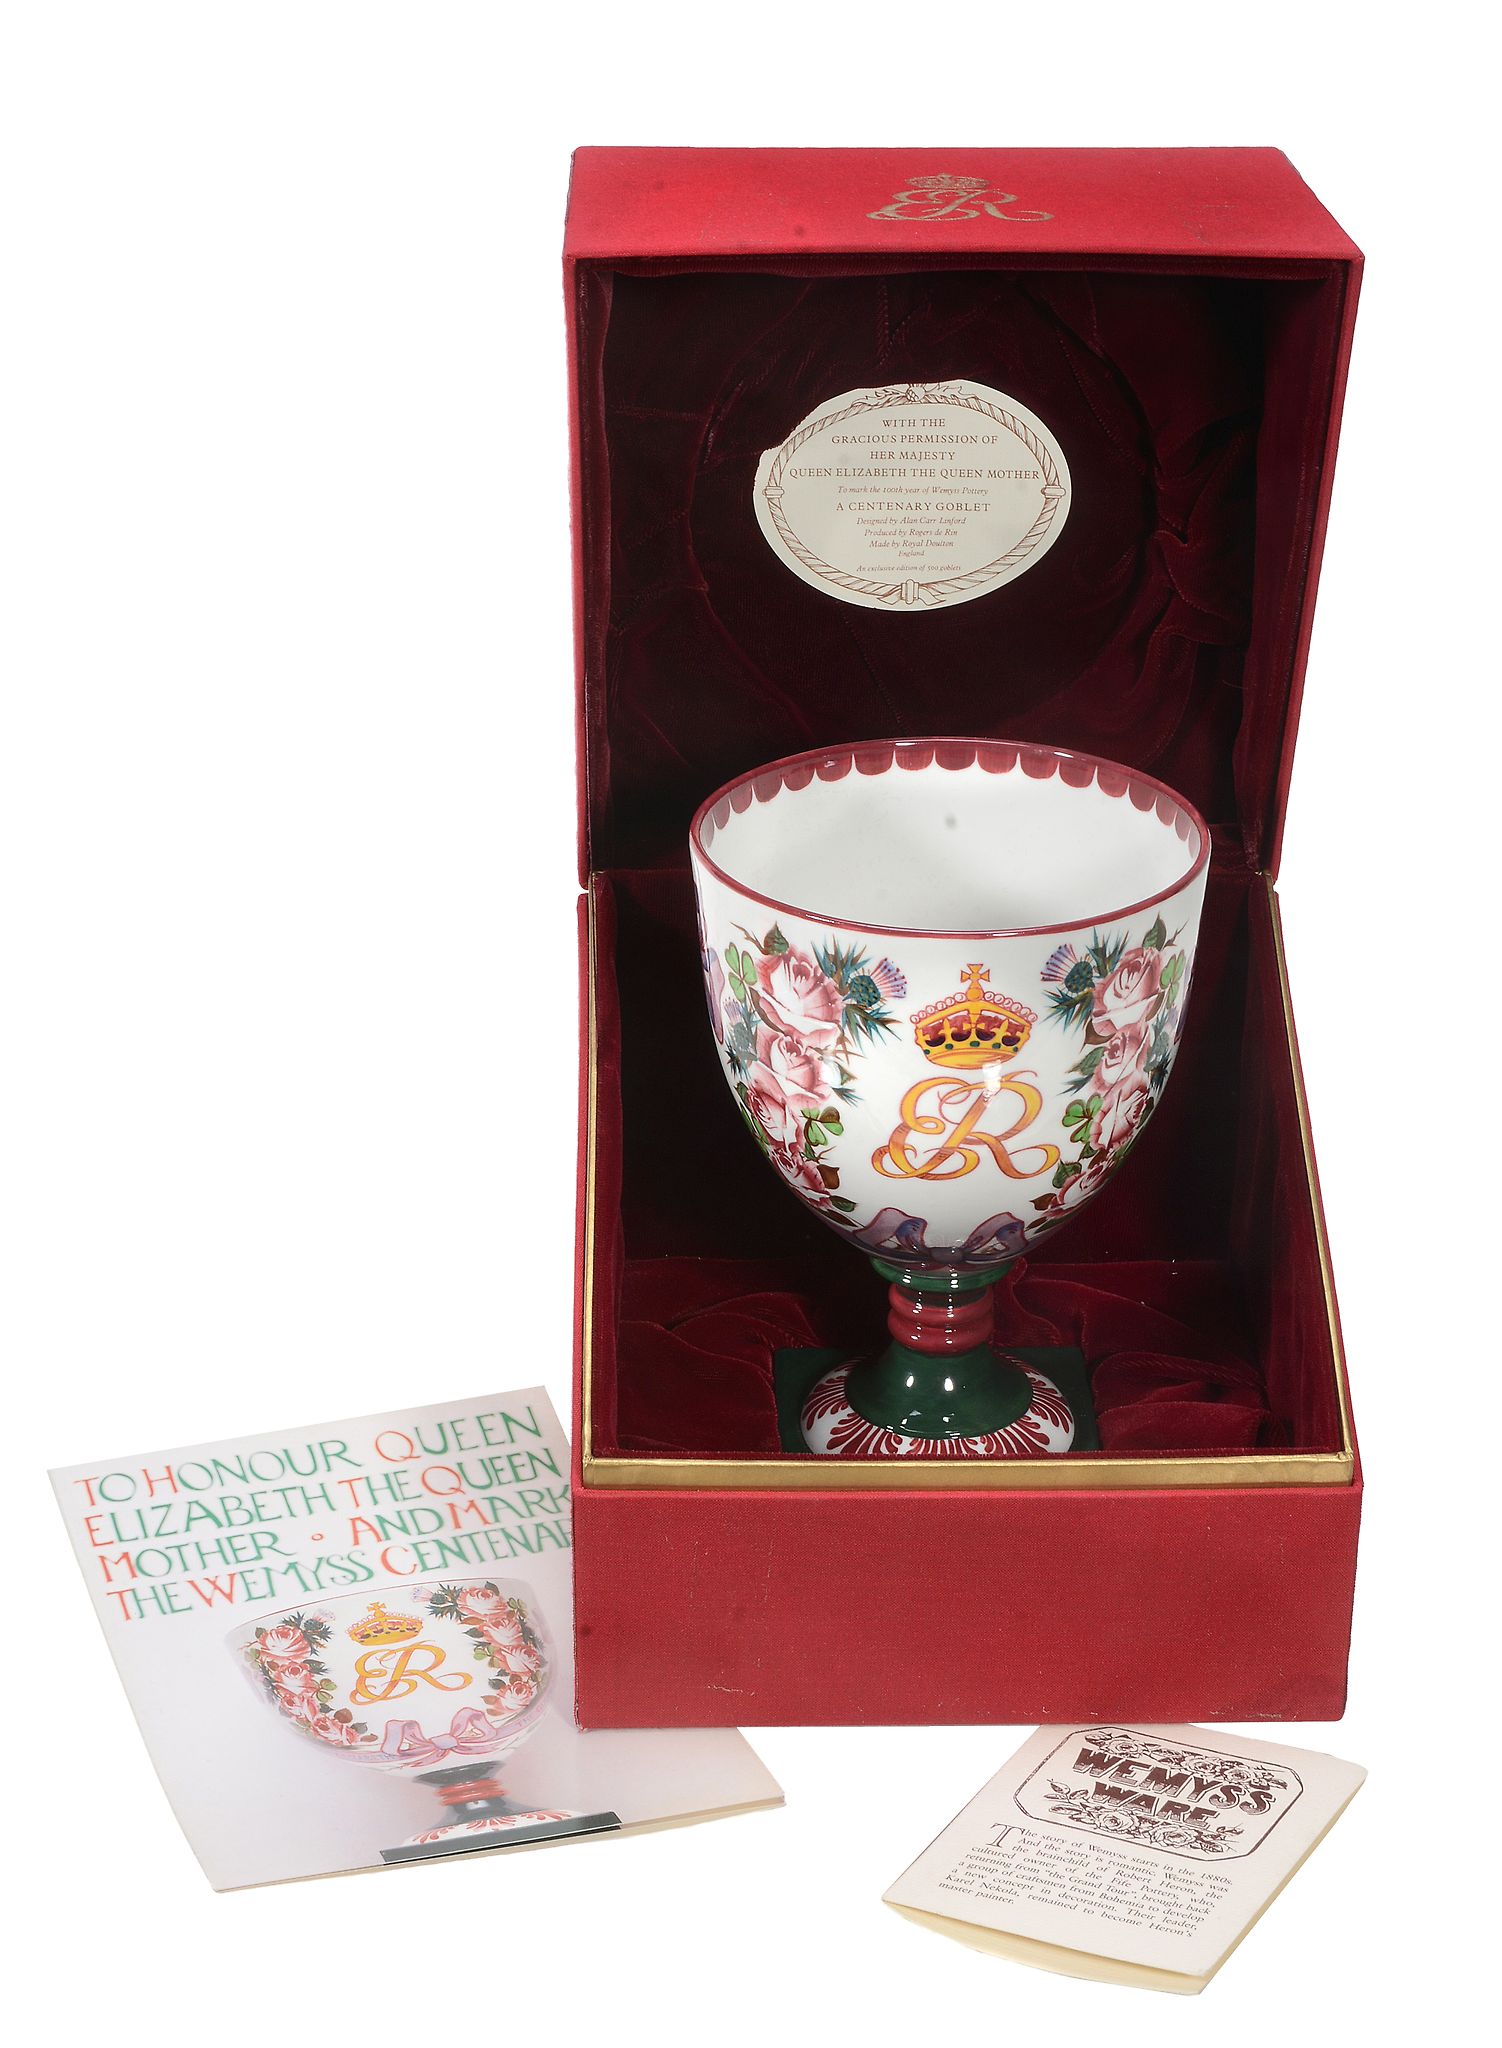 A Royal Doulton Wemyss Centenary Presentation goblet and presentation box - Image 2 of 4